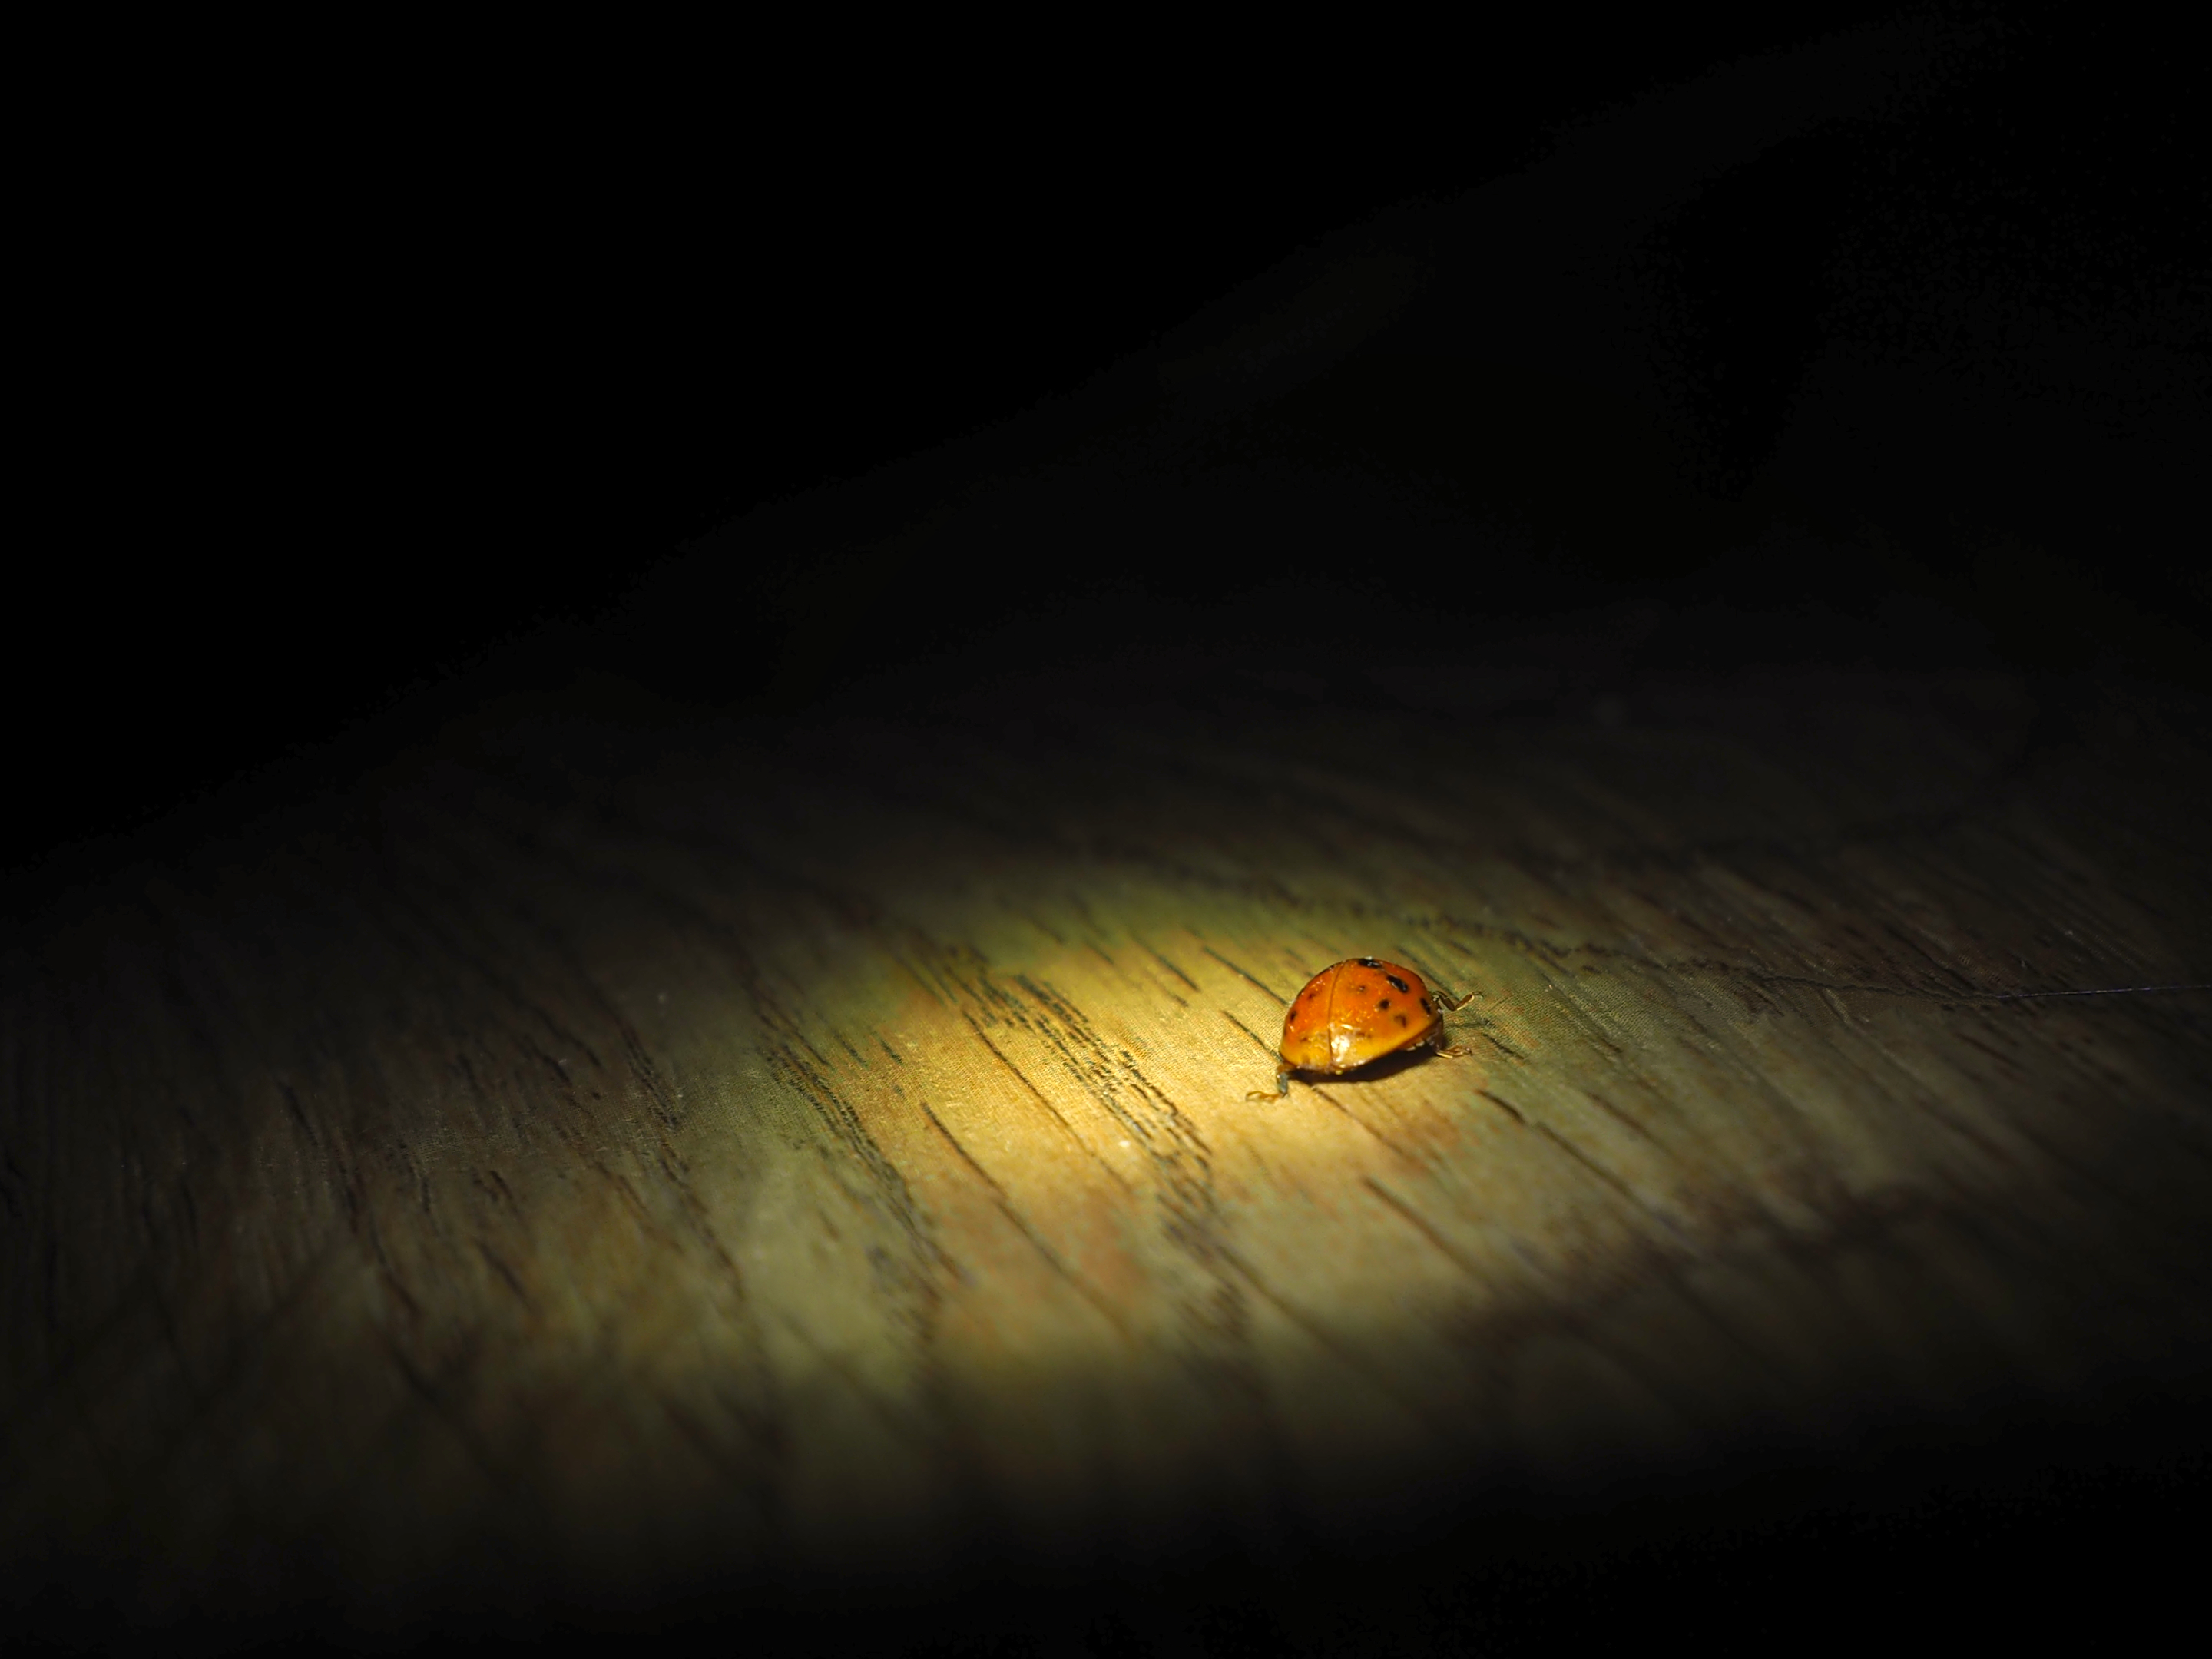 harlequin ladybug in the dark lit by a light beam